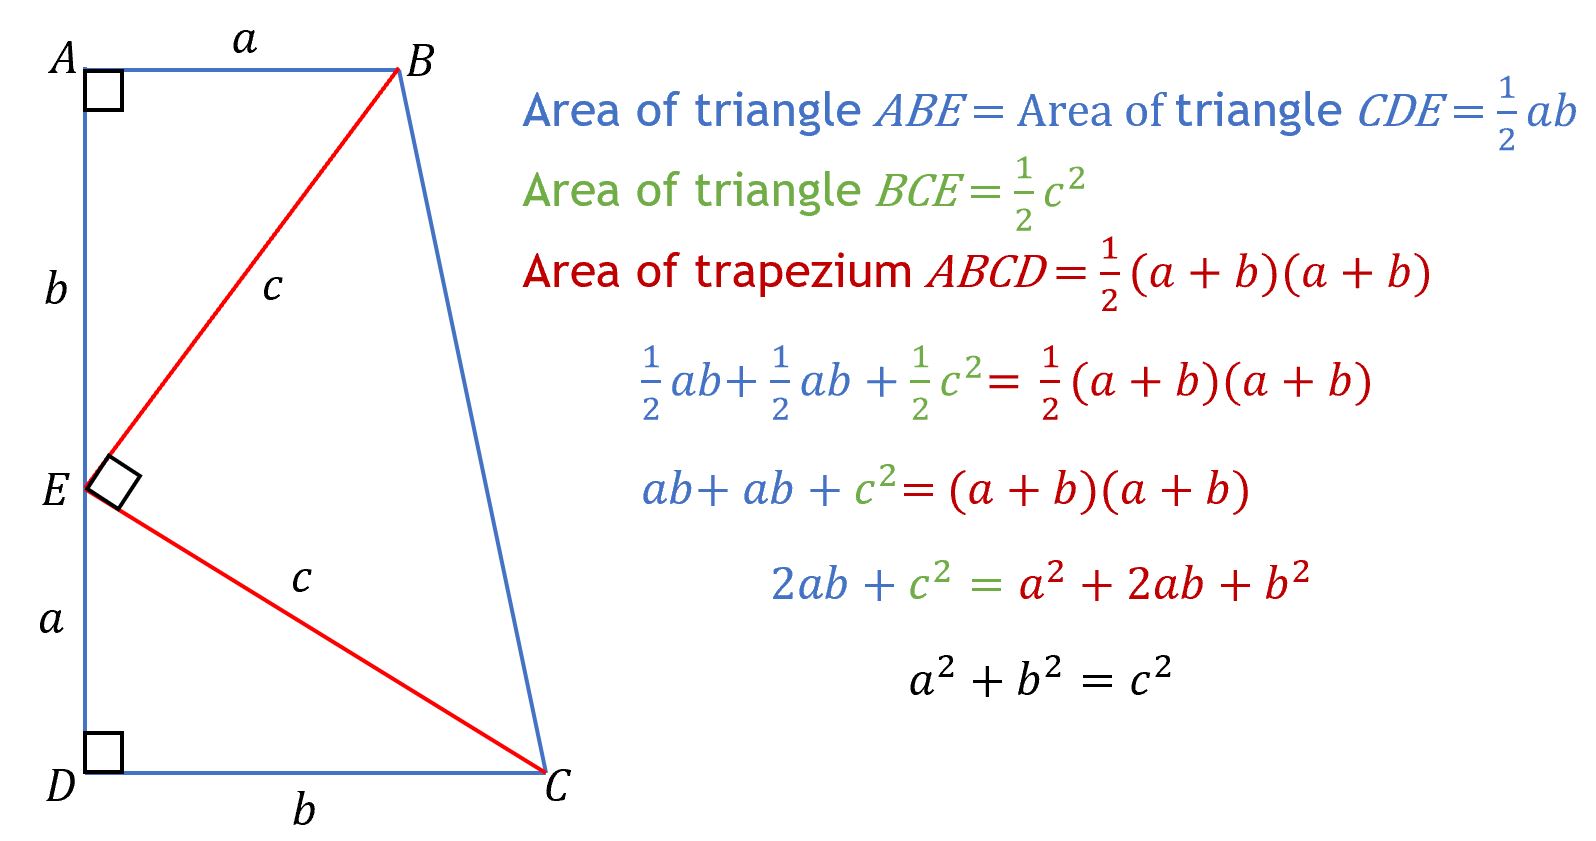 Fermat's right triangle theorem - Wikipedia